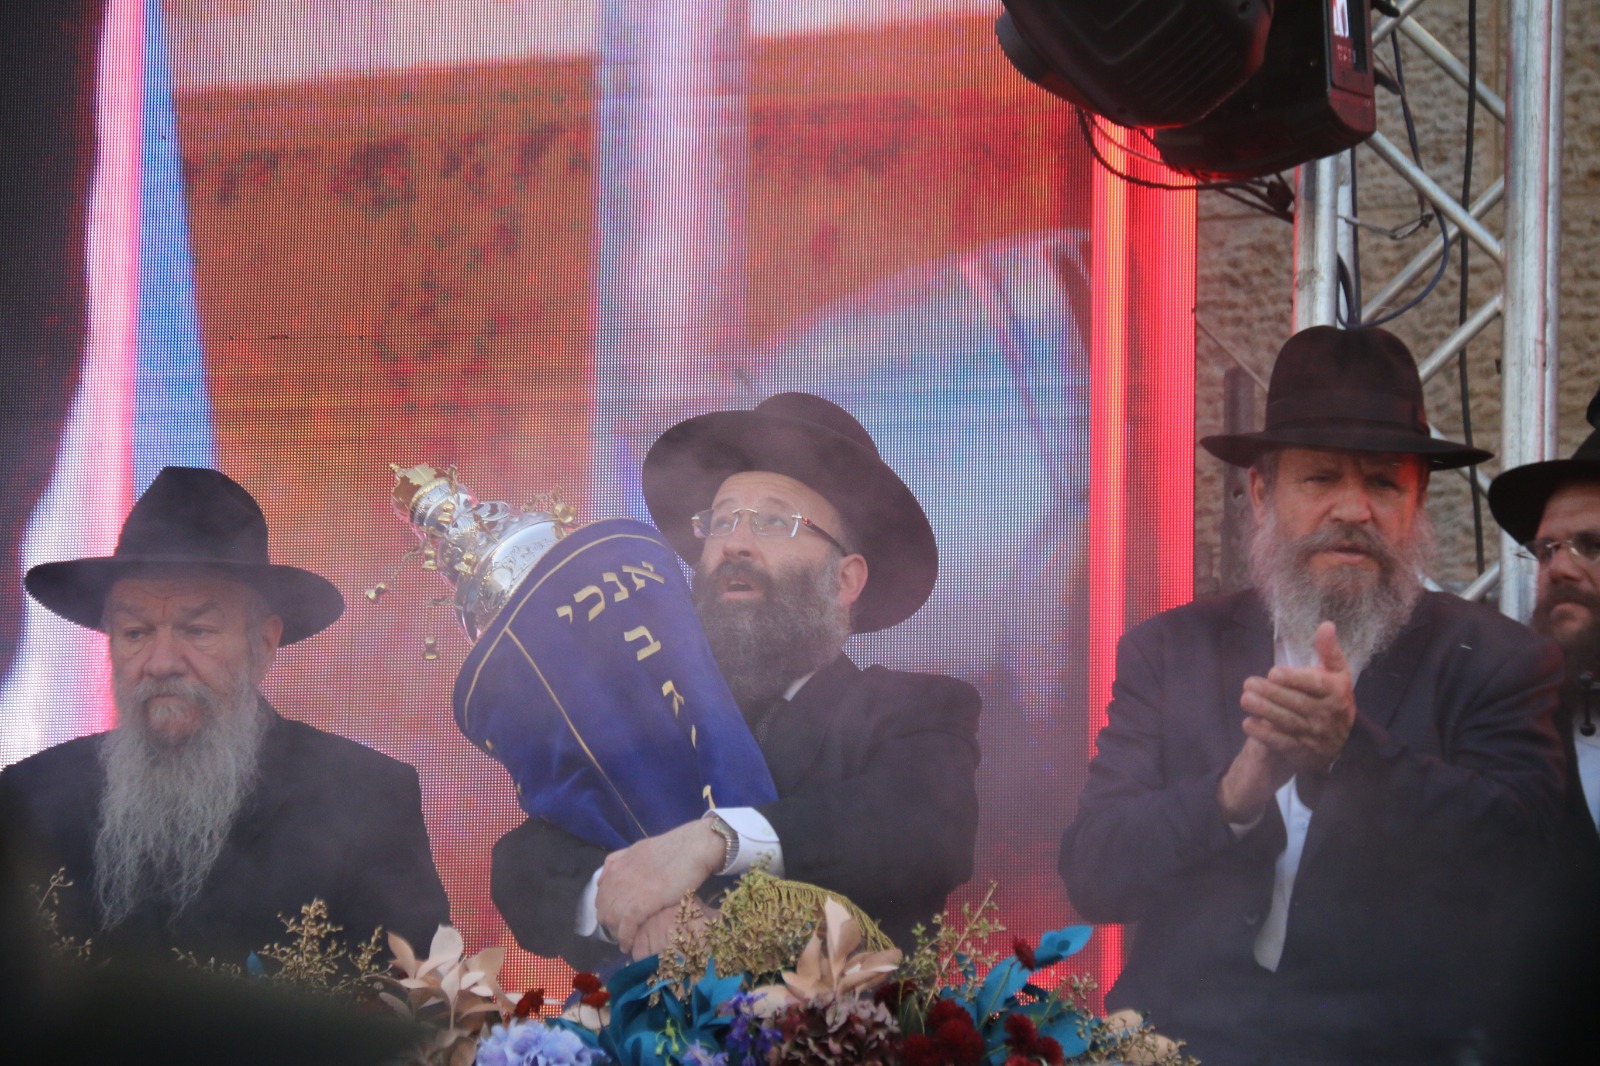 Jewish community center celebrates dedication of its first Torah scroll